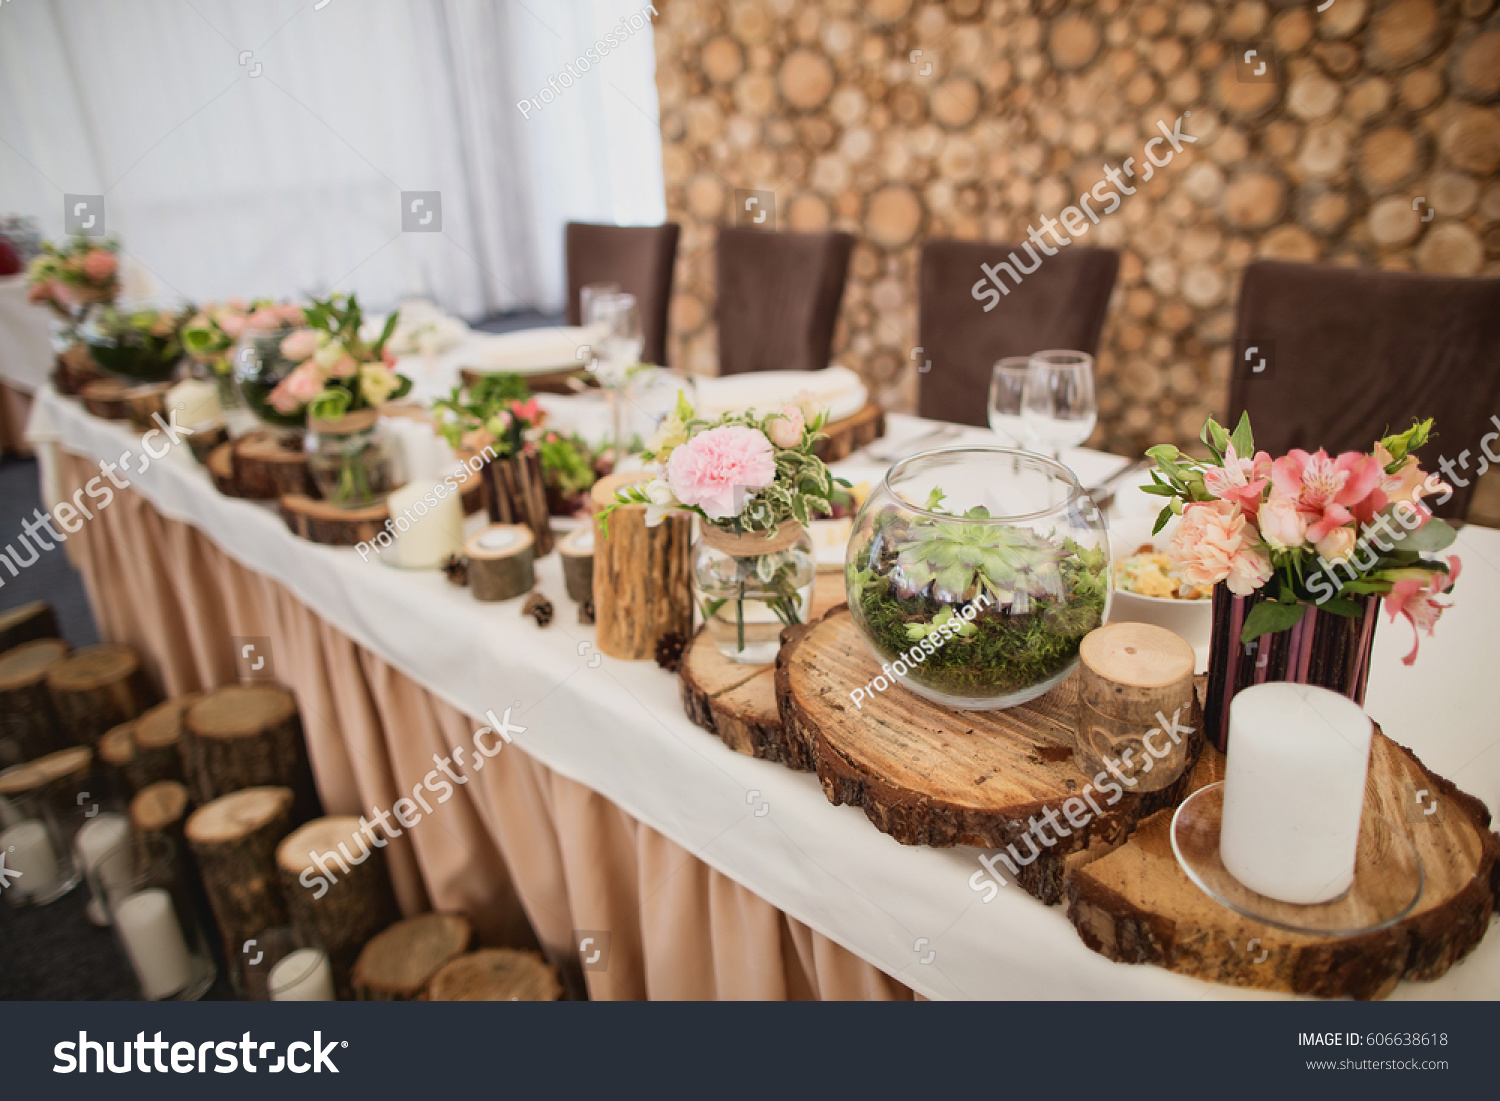 Wood Wedding Decor Stockfoto Jetzt Bearbeiten 606638618 Shutterstock